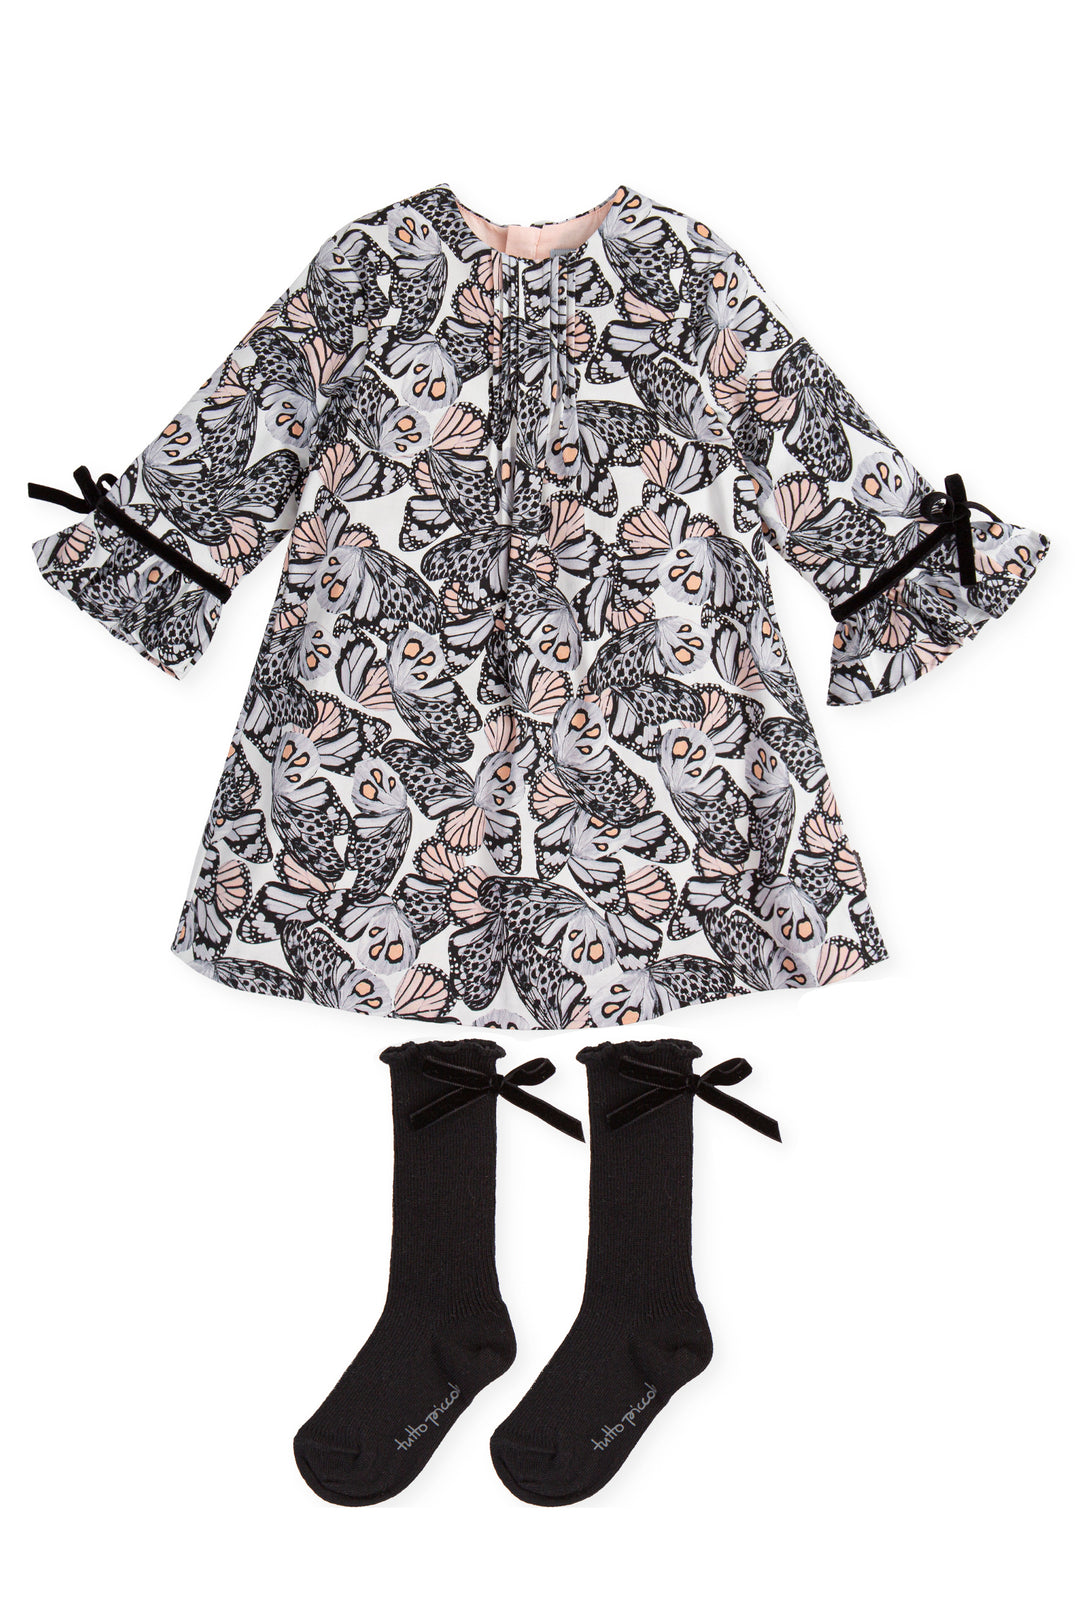 Tutto Piccolo "Navie" Grey Butterfly Dress & Socks | Millie and John